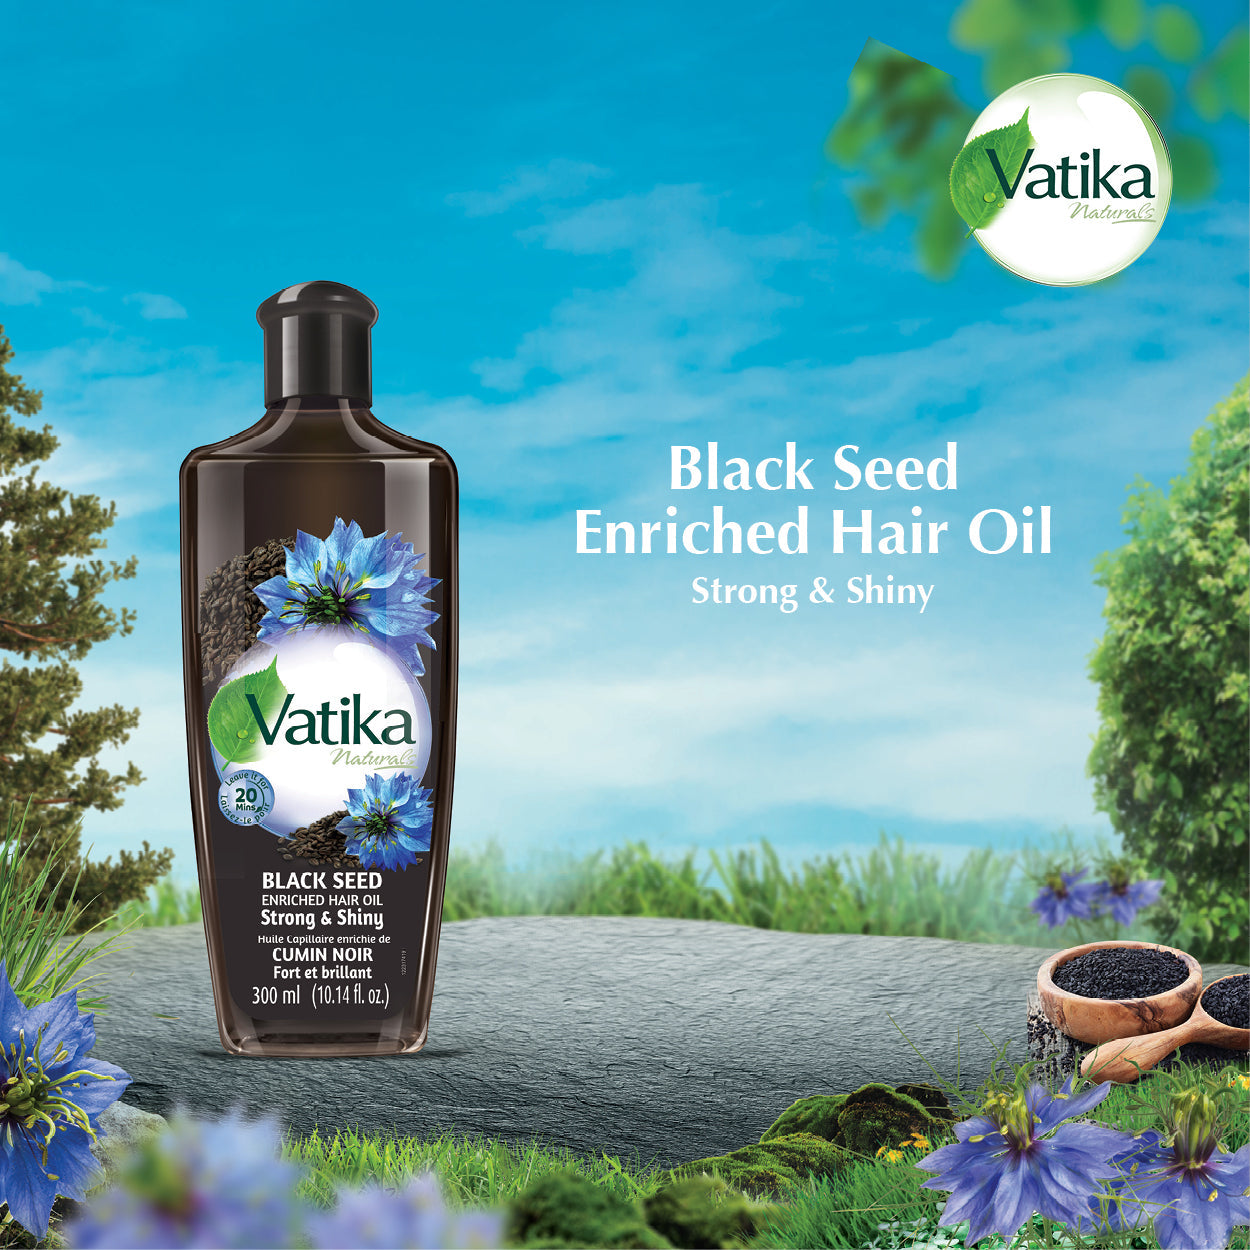 Vatika Naturals Black Seed Enriched Hair Oil